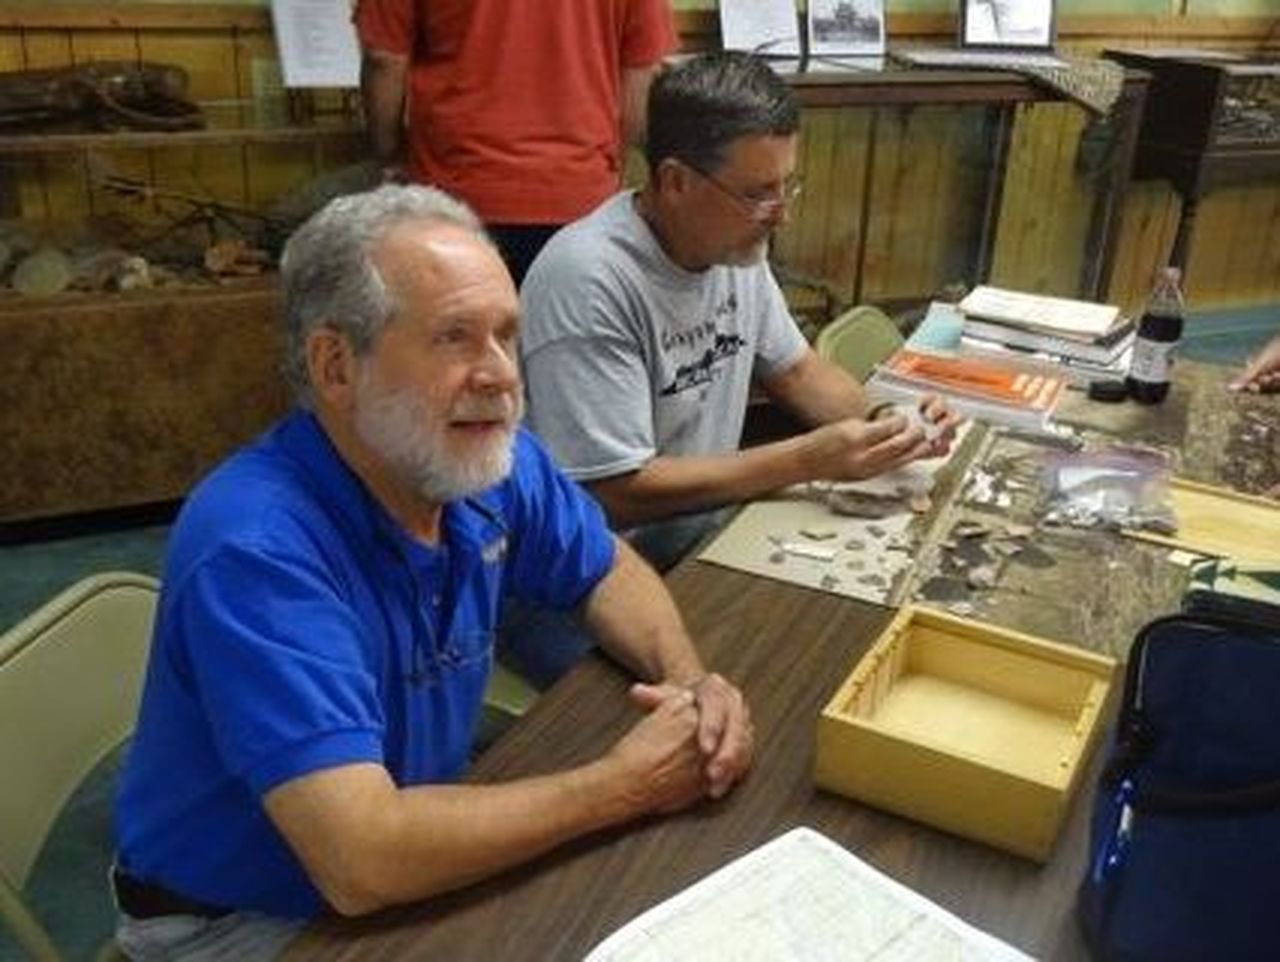 Archeological Experts Paul Katz and Rick Day 